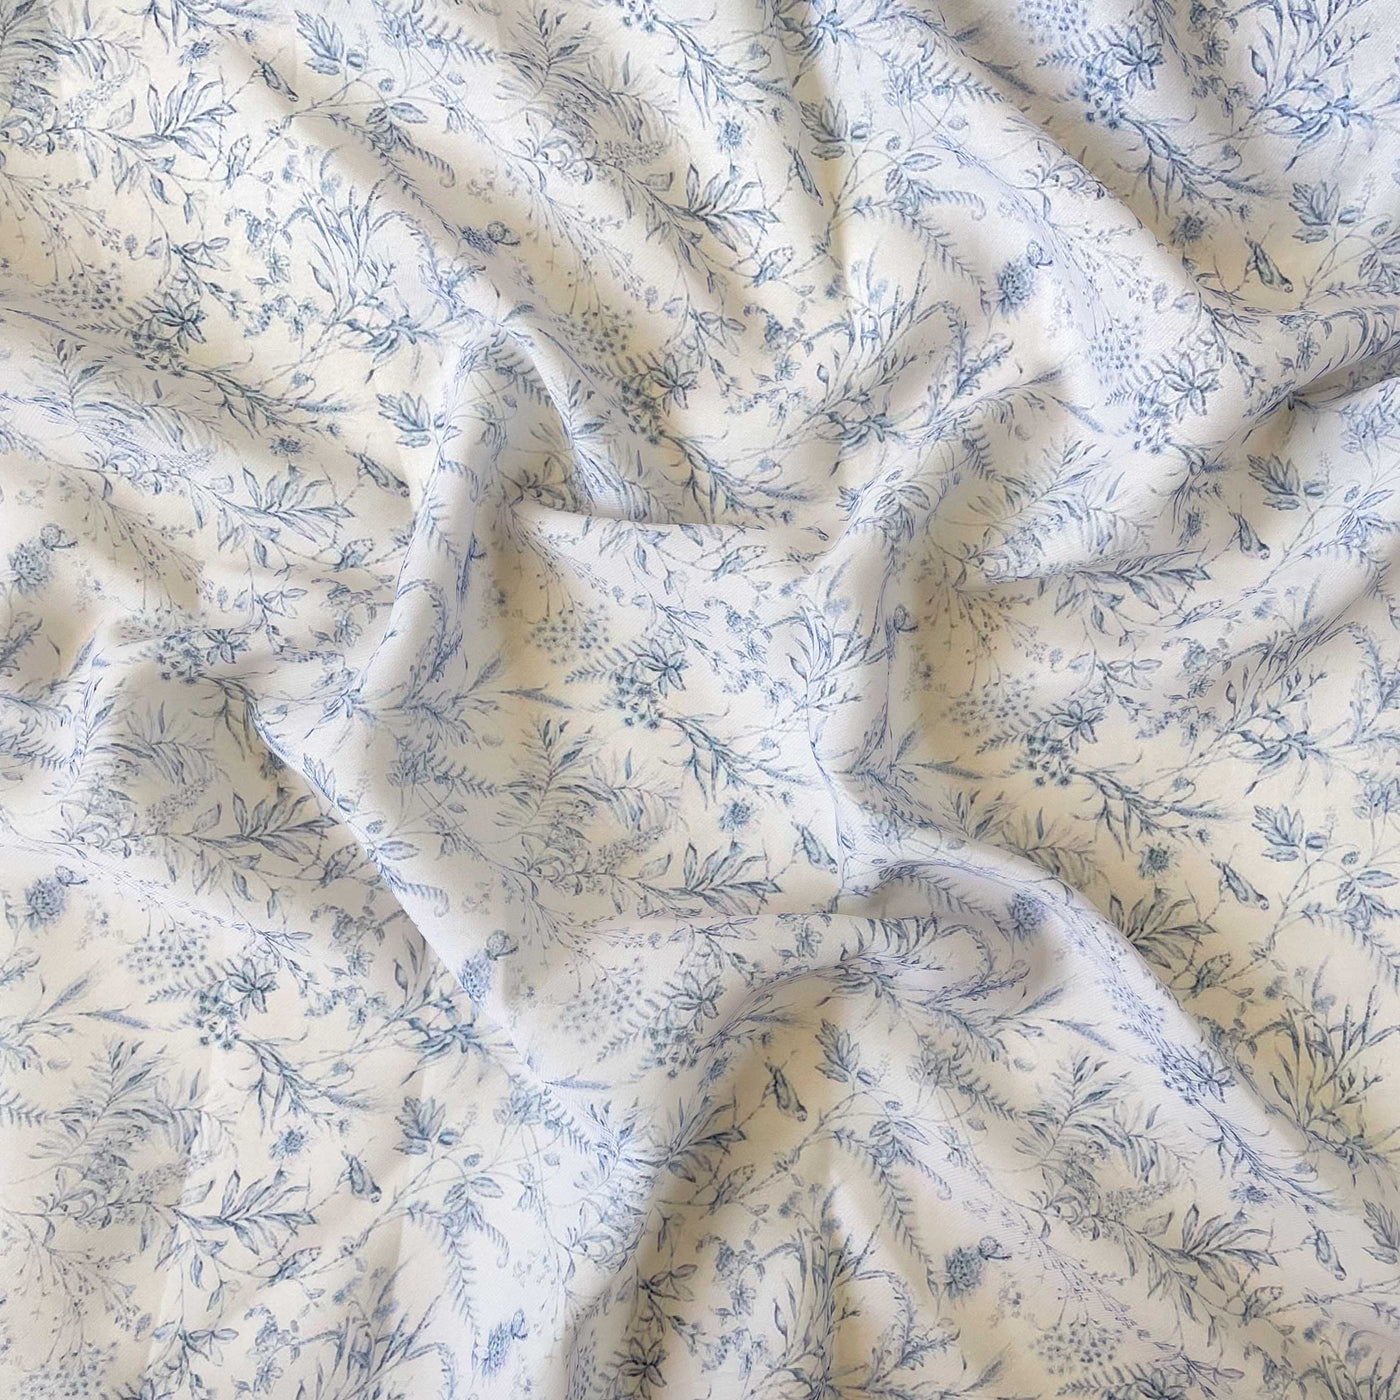 Digital Printed Organza Fabric Fabric Blue & Grey Victorian Floral Garden Printed Soft Organza Fabric (Width 45 Inches)